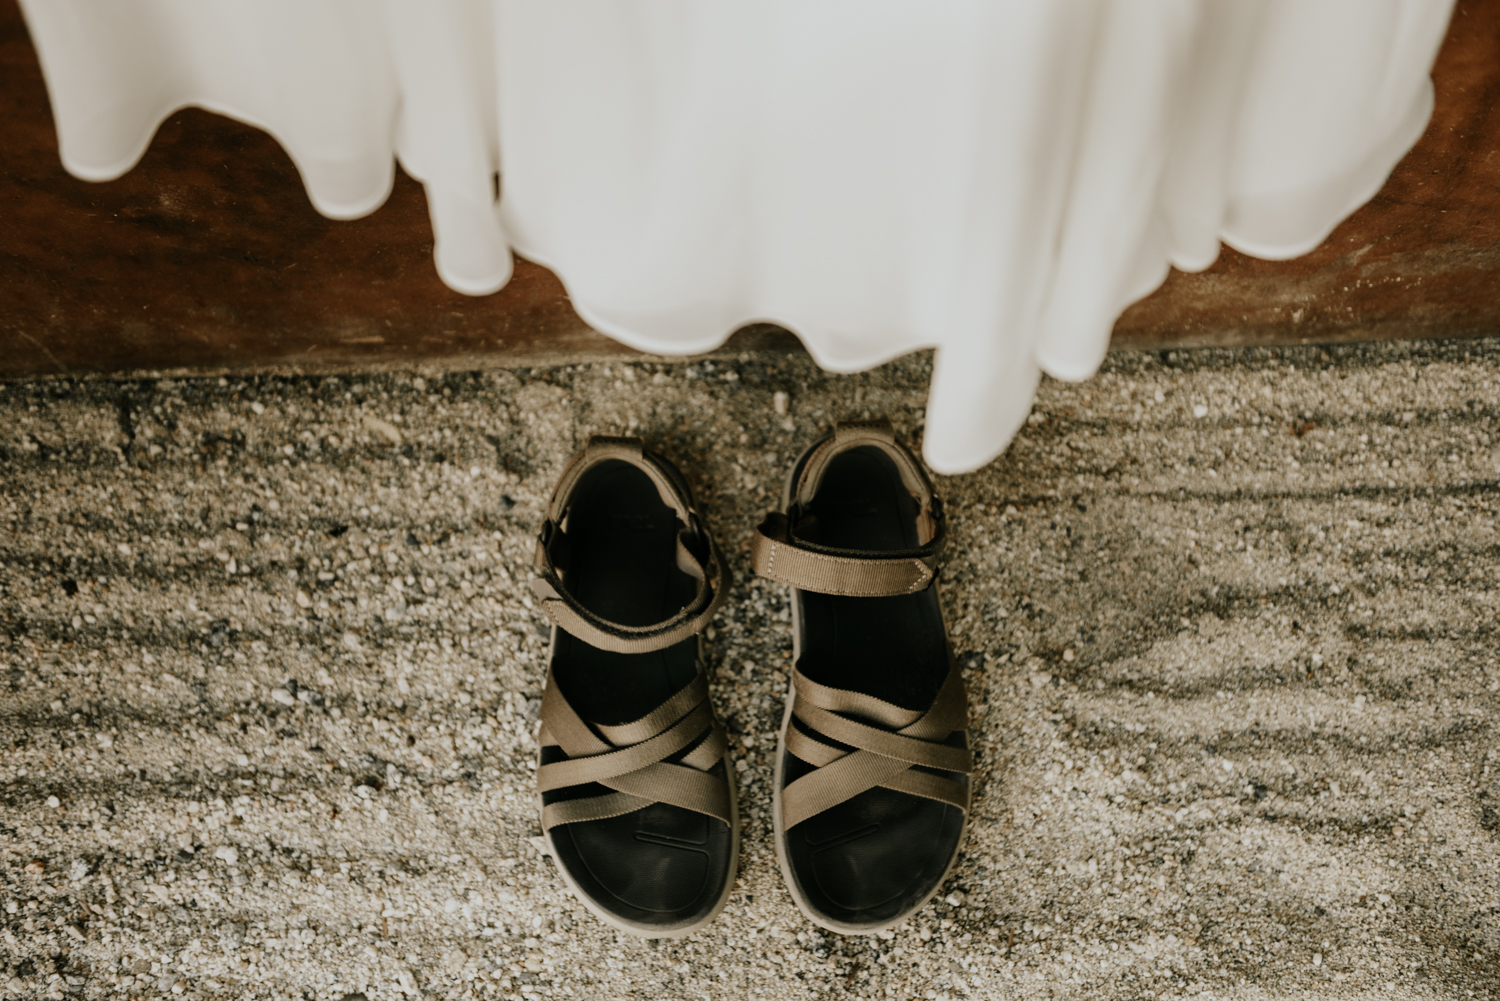 The best Destination Wedding shoes, Todos Santos, Mexico